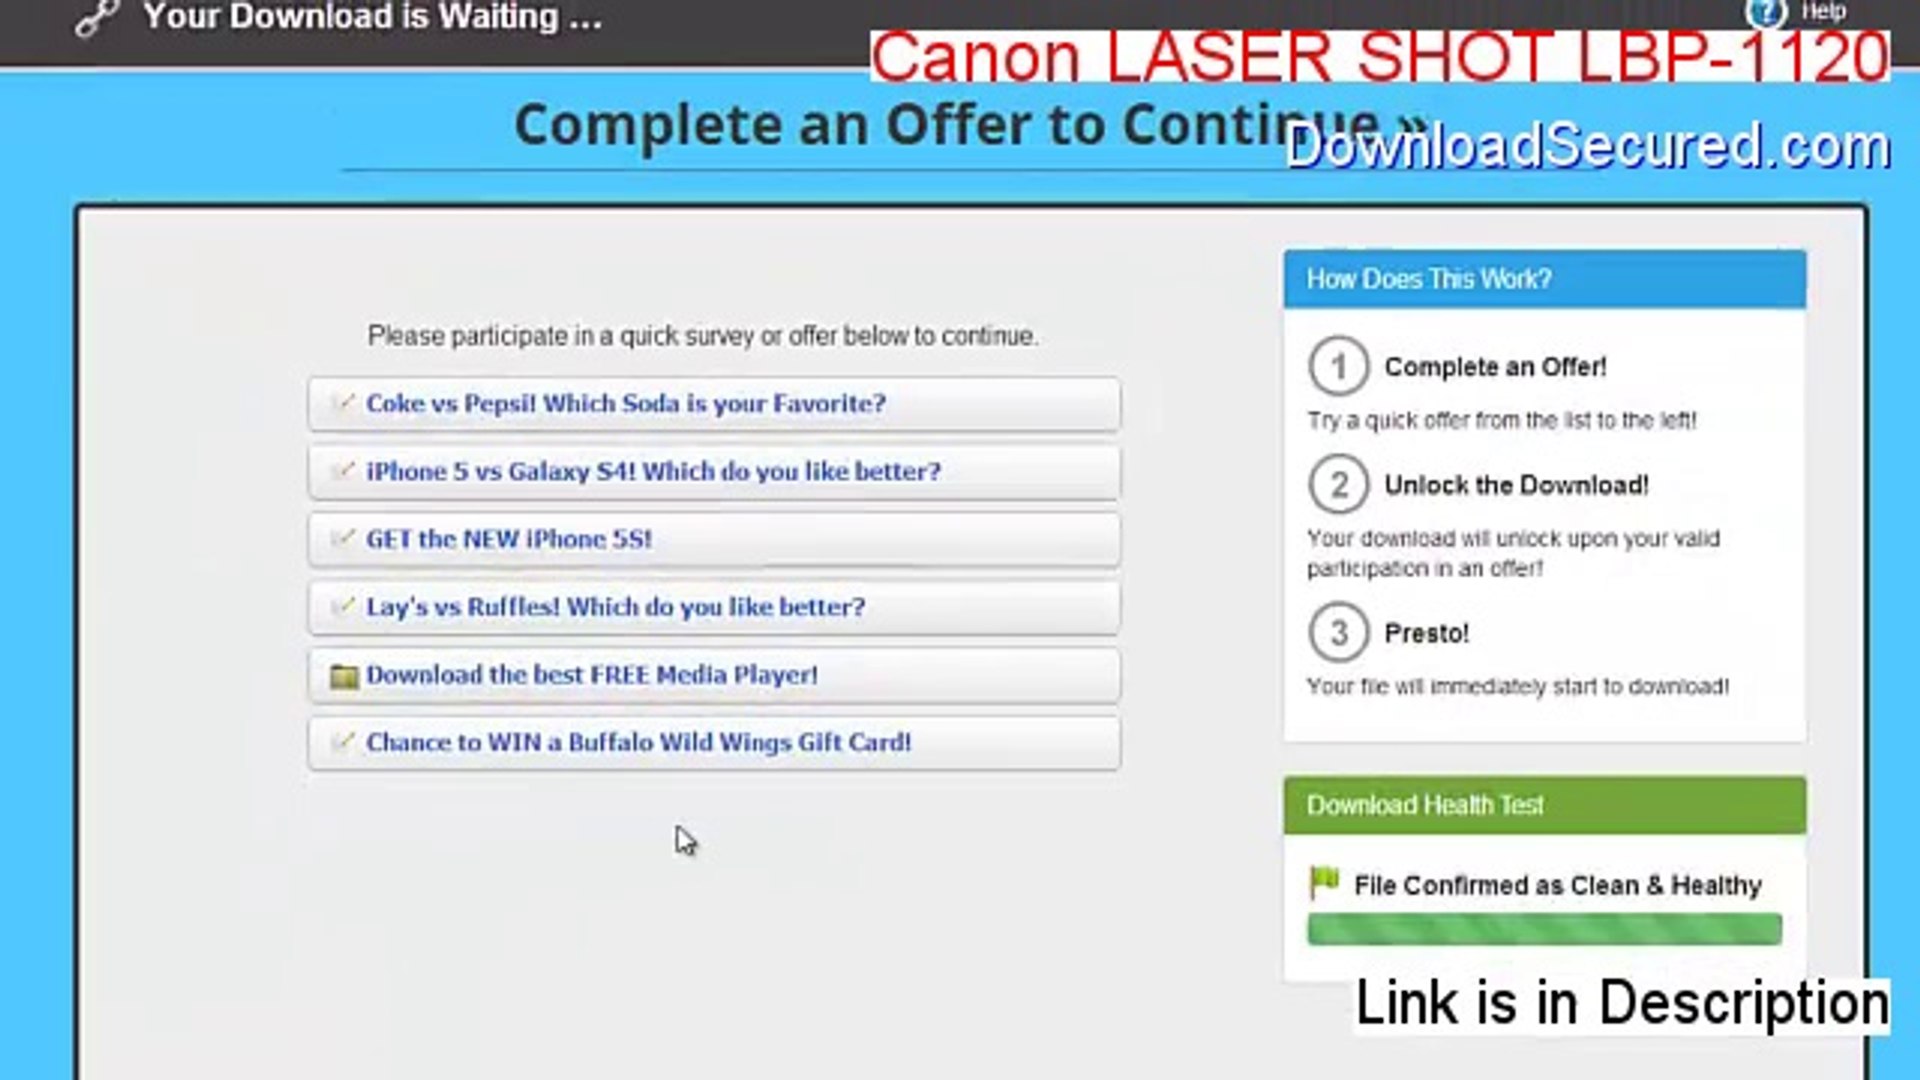 Canon LASER SHOT LBP-1120 Download (Legit Download 2014) - video Dailymotion